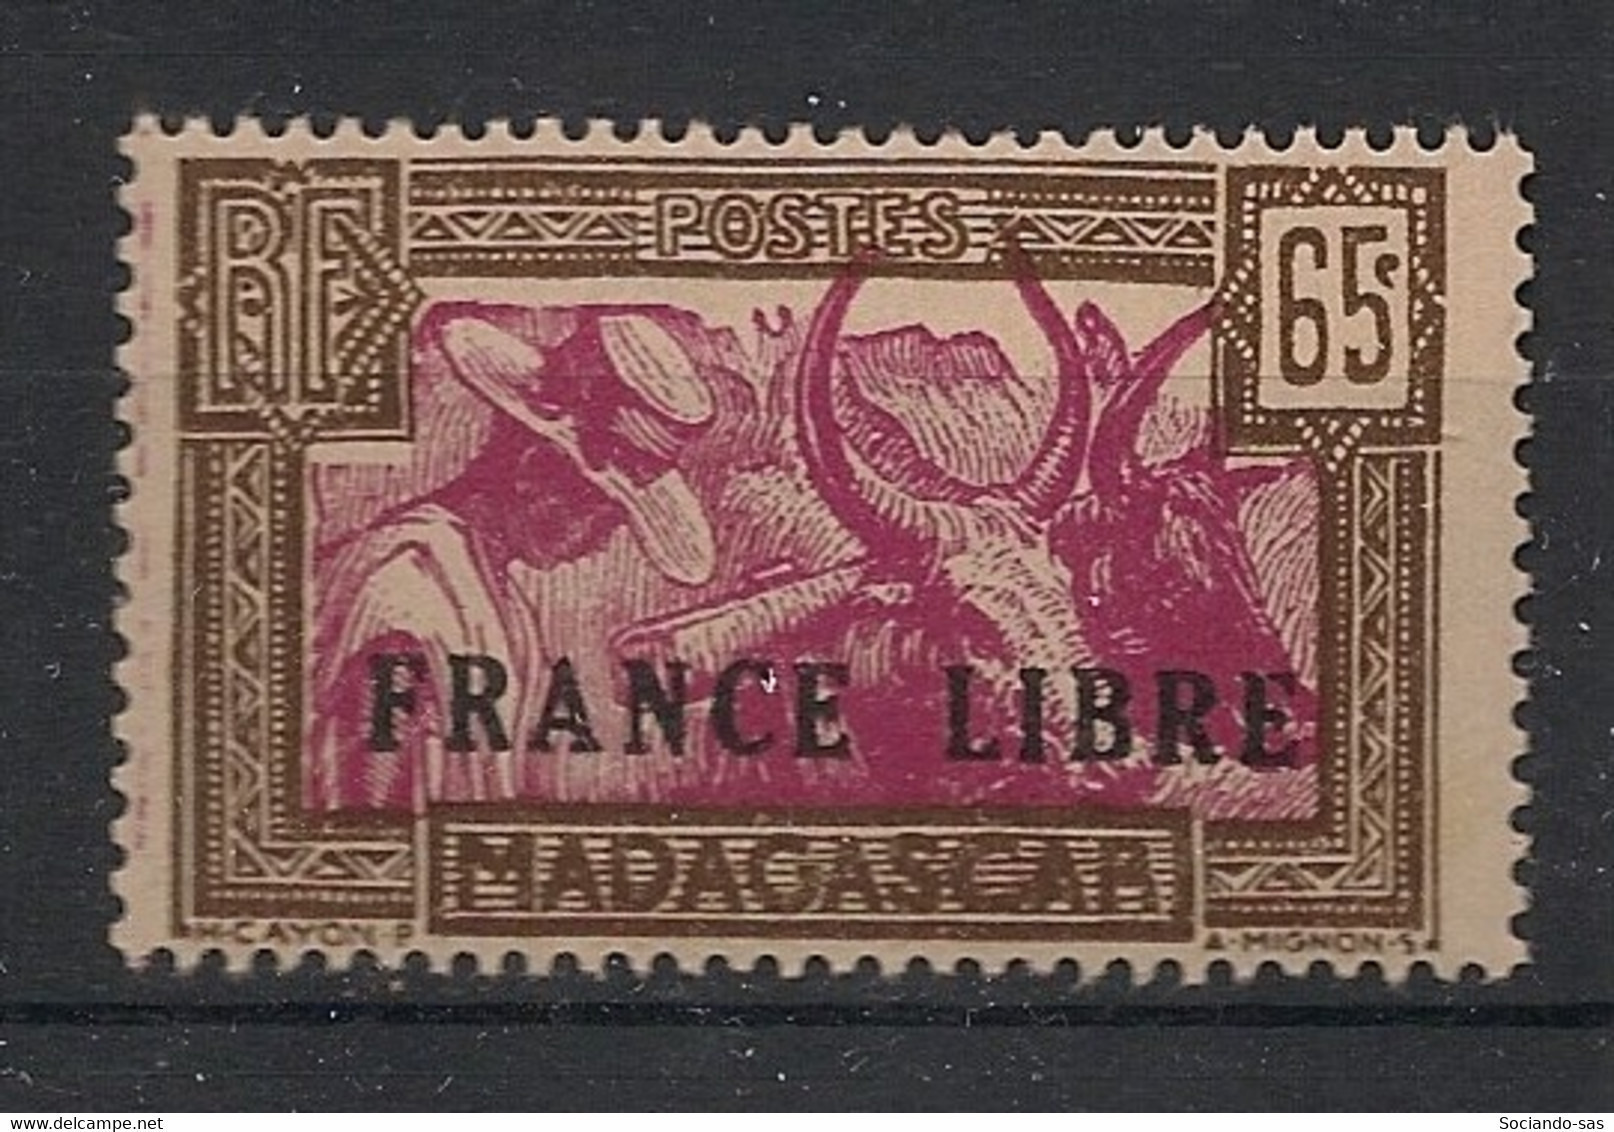 MADAGASCAR - 1942 - N°YT. 236 - France Libre - Neuf GC** / MNH / Postfrisch - Neufs